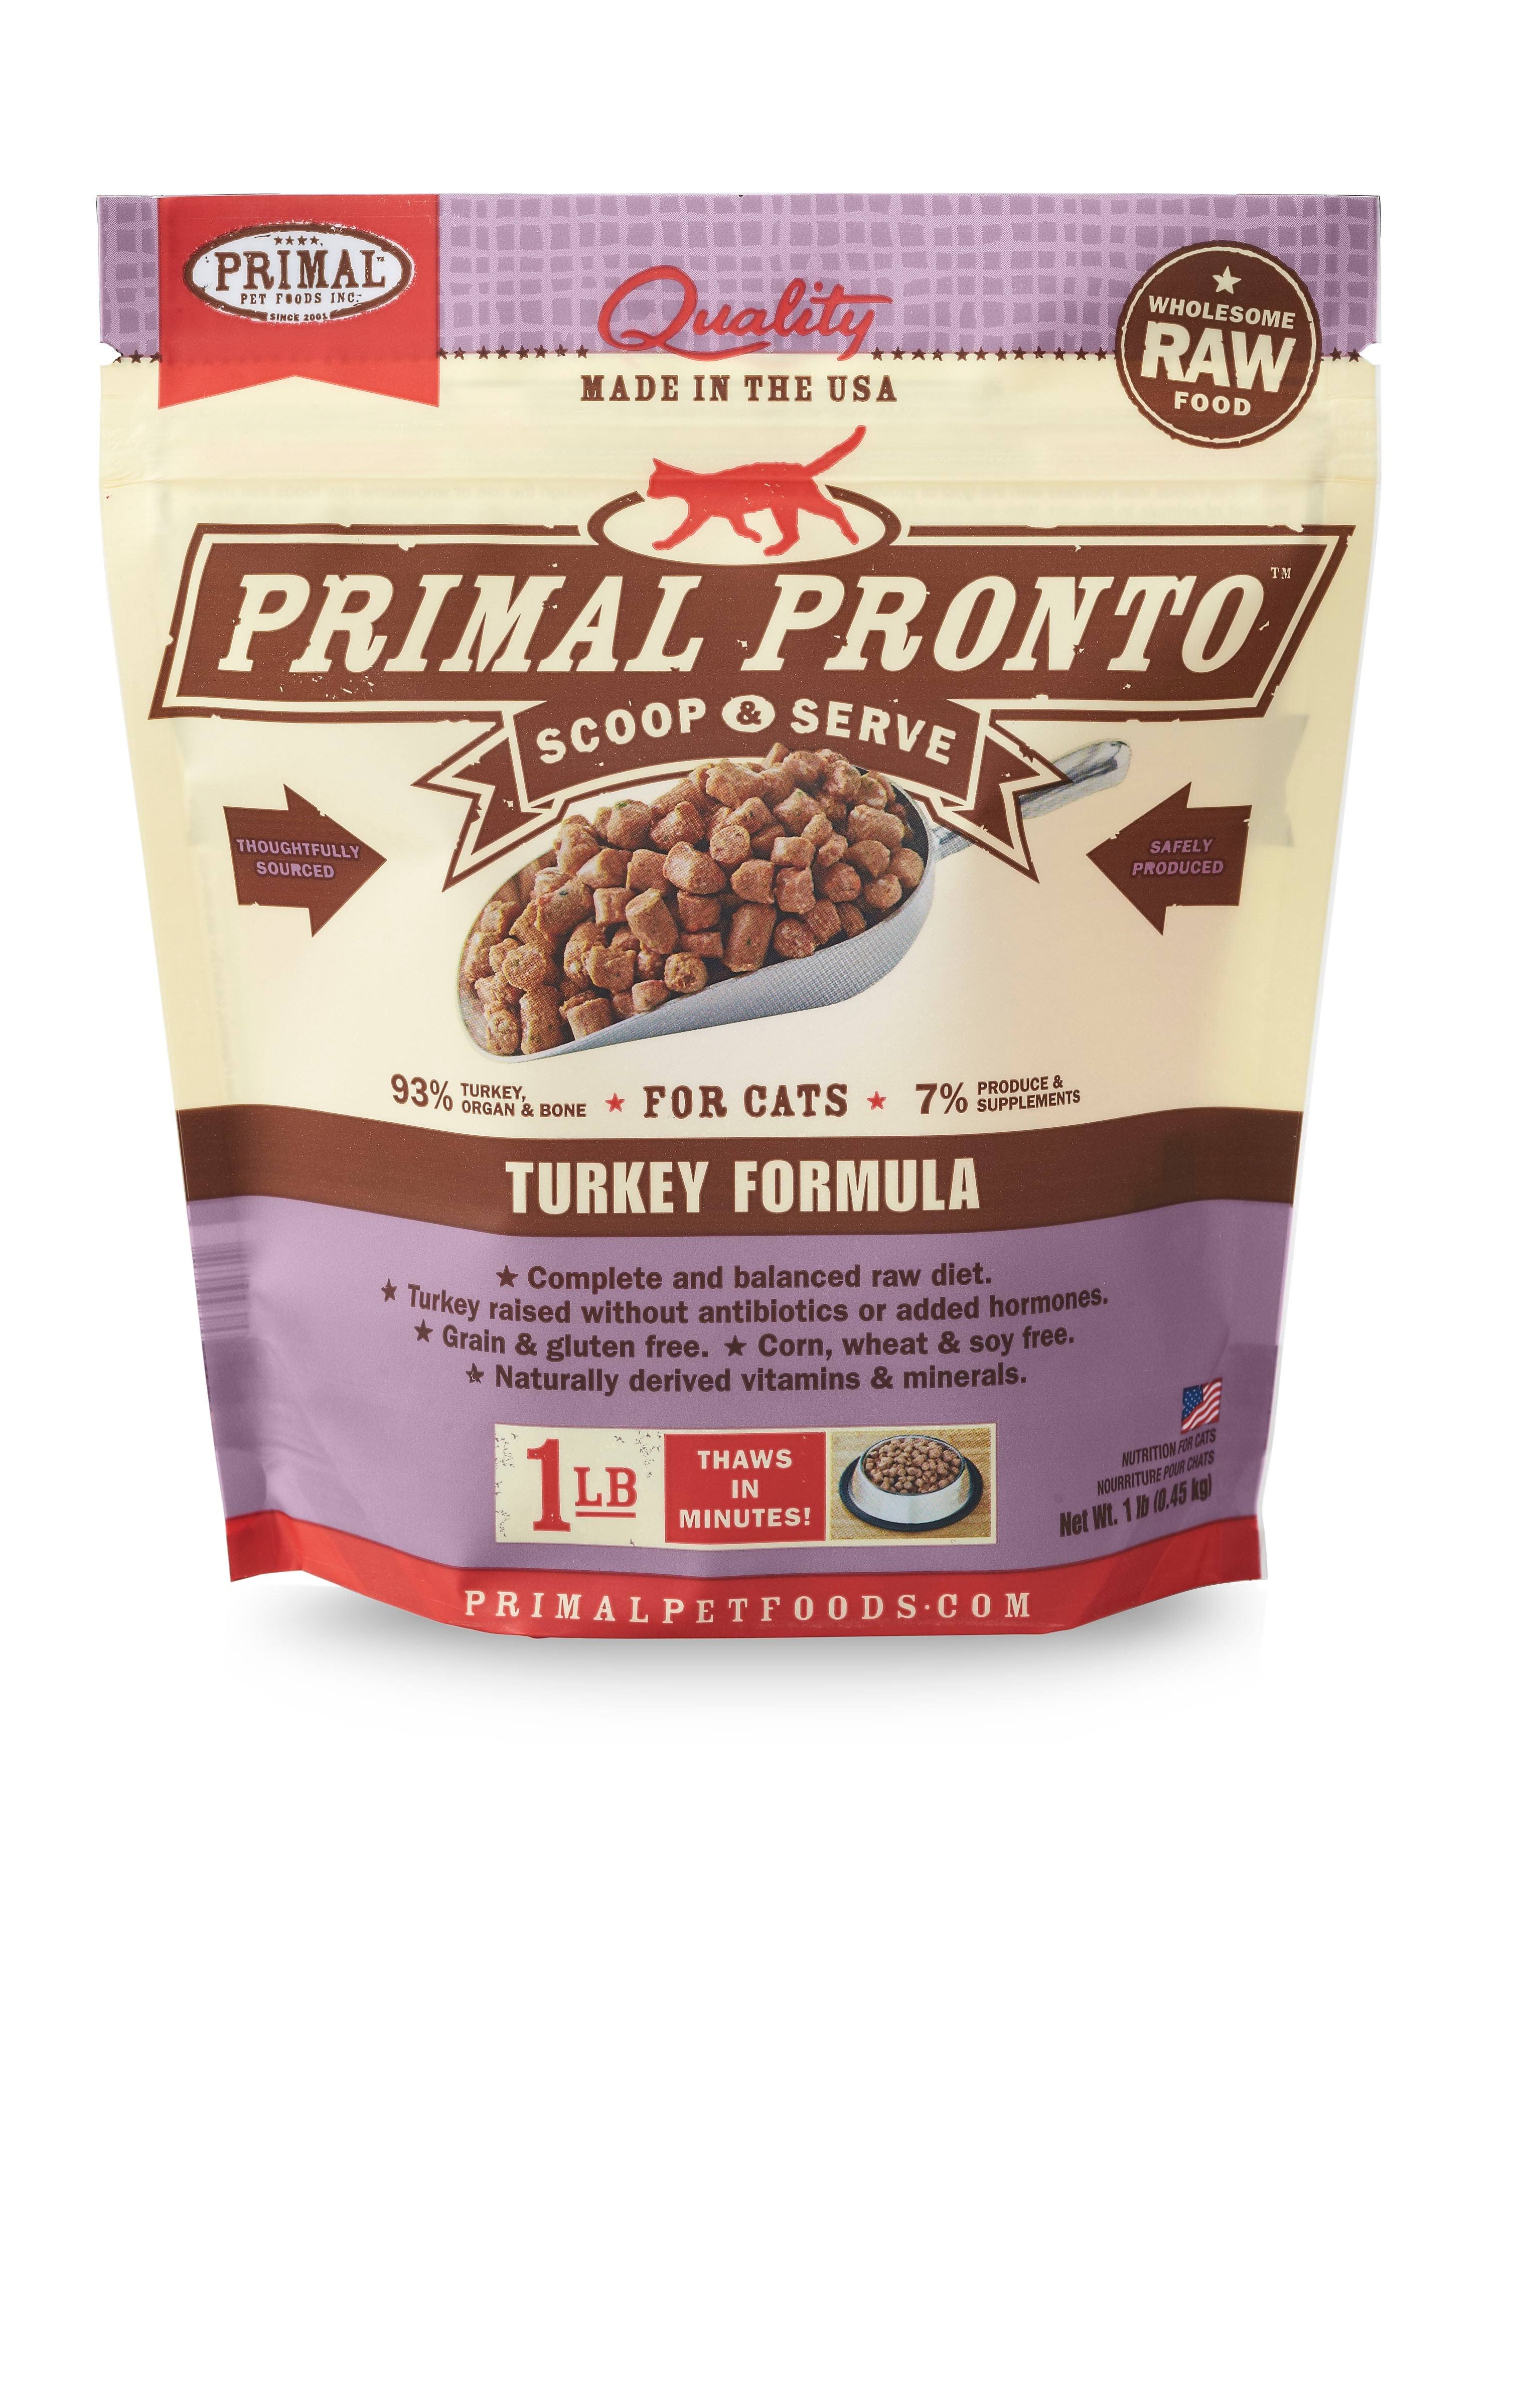 Primal Frozen Raw Pronto for Cats - Turkey Formula